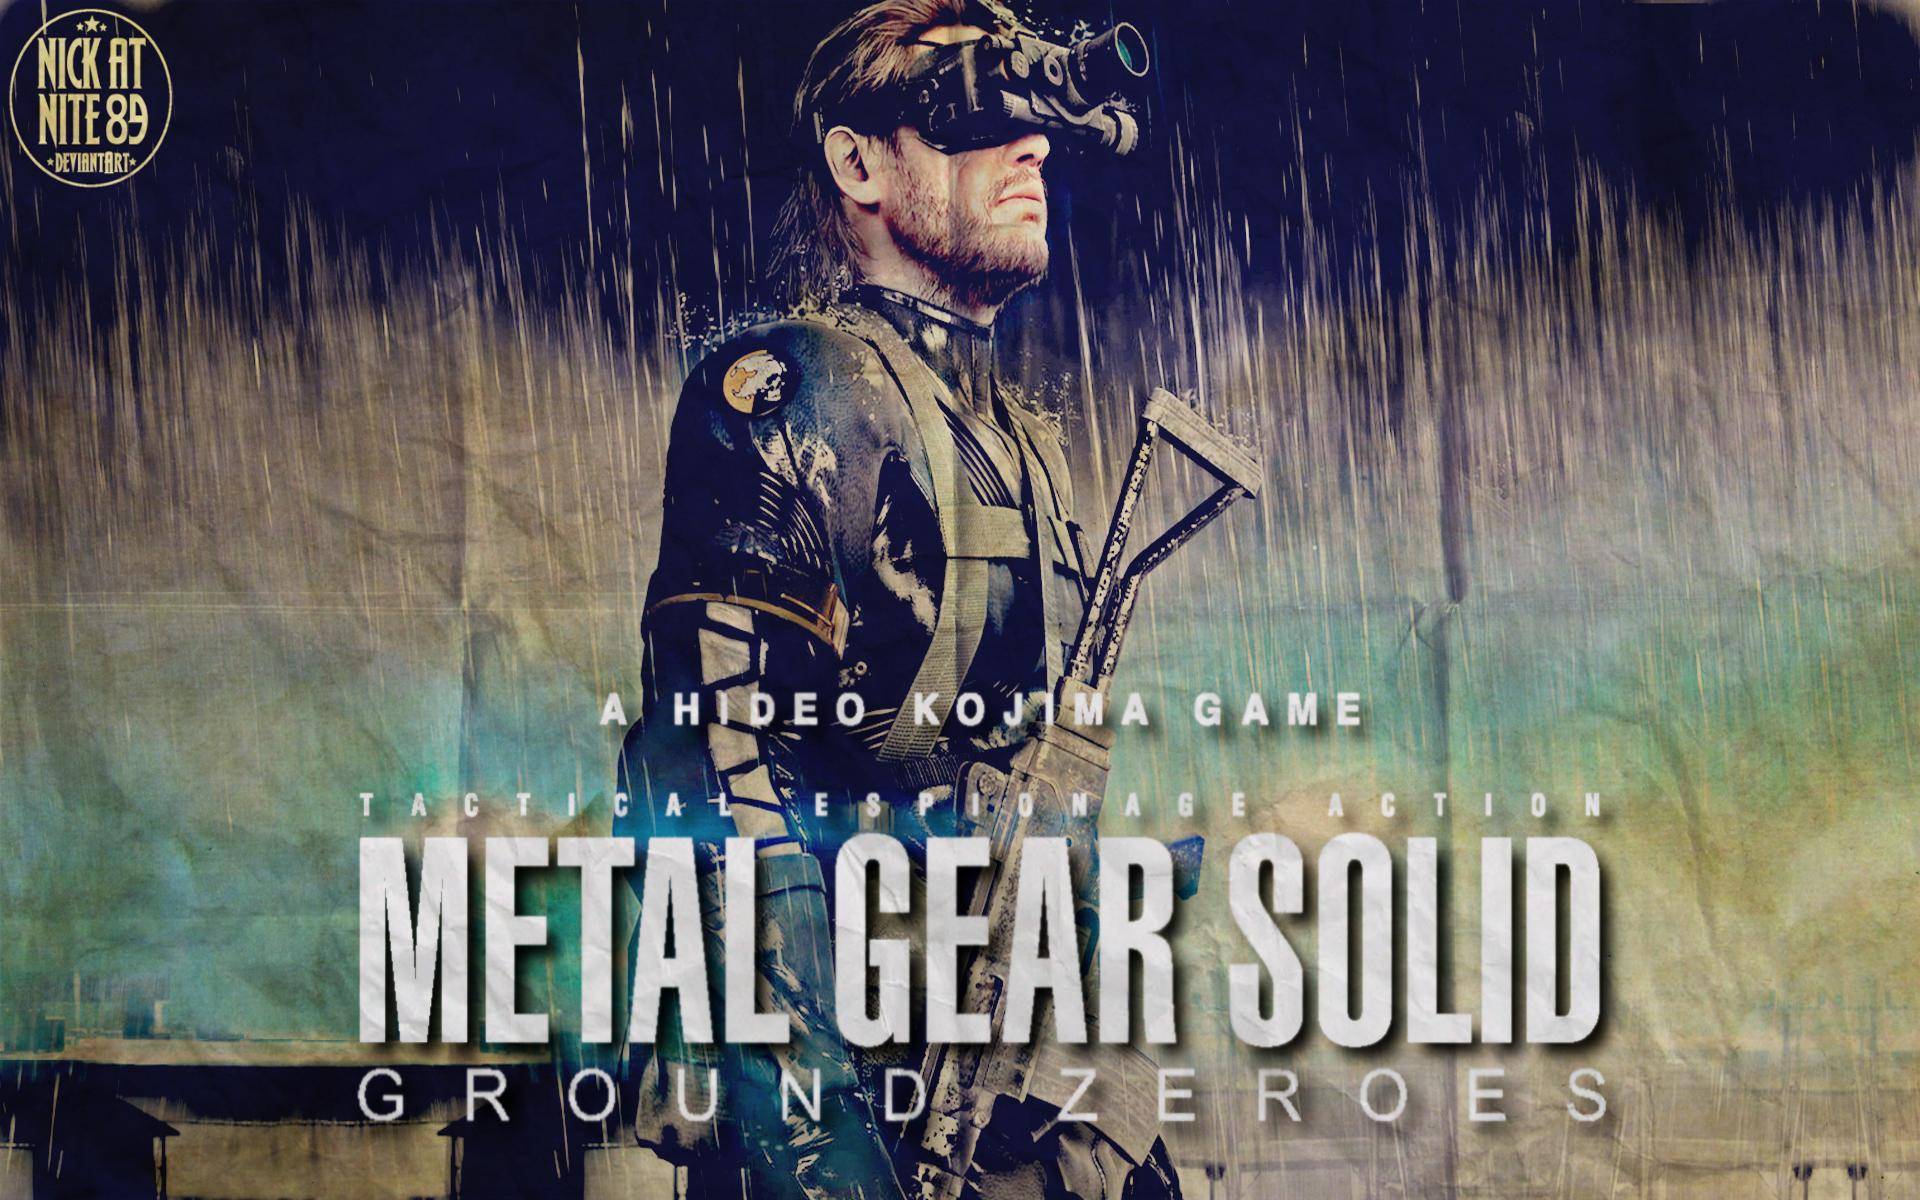 Metal Gear Solid Ground Zeroes Wallpaper In HD